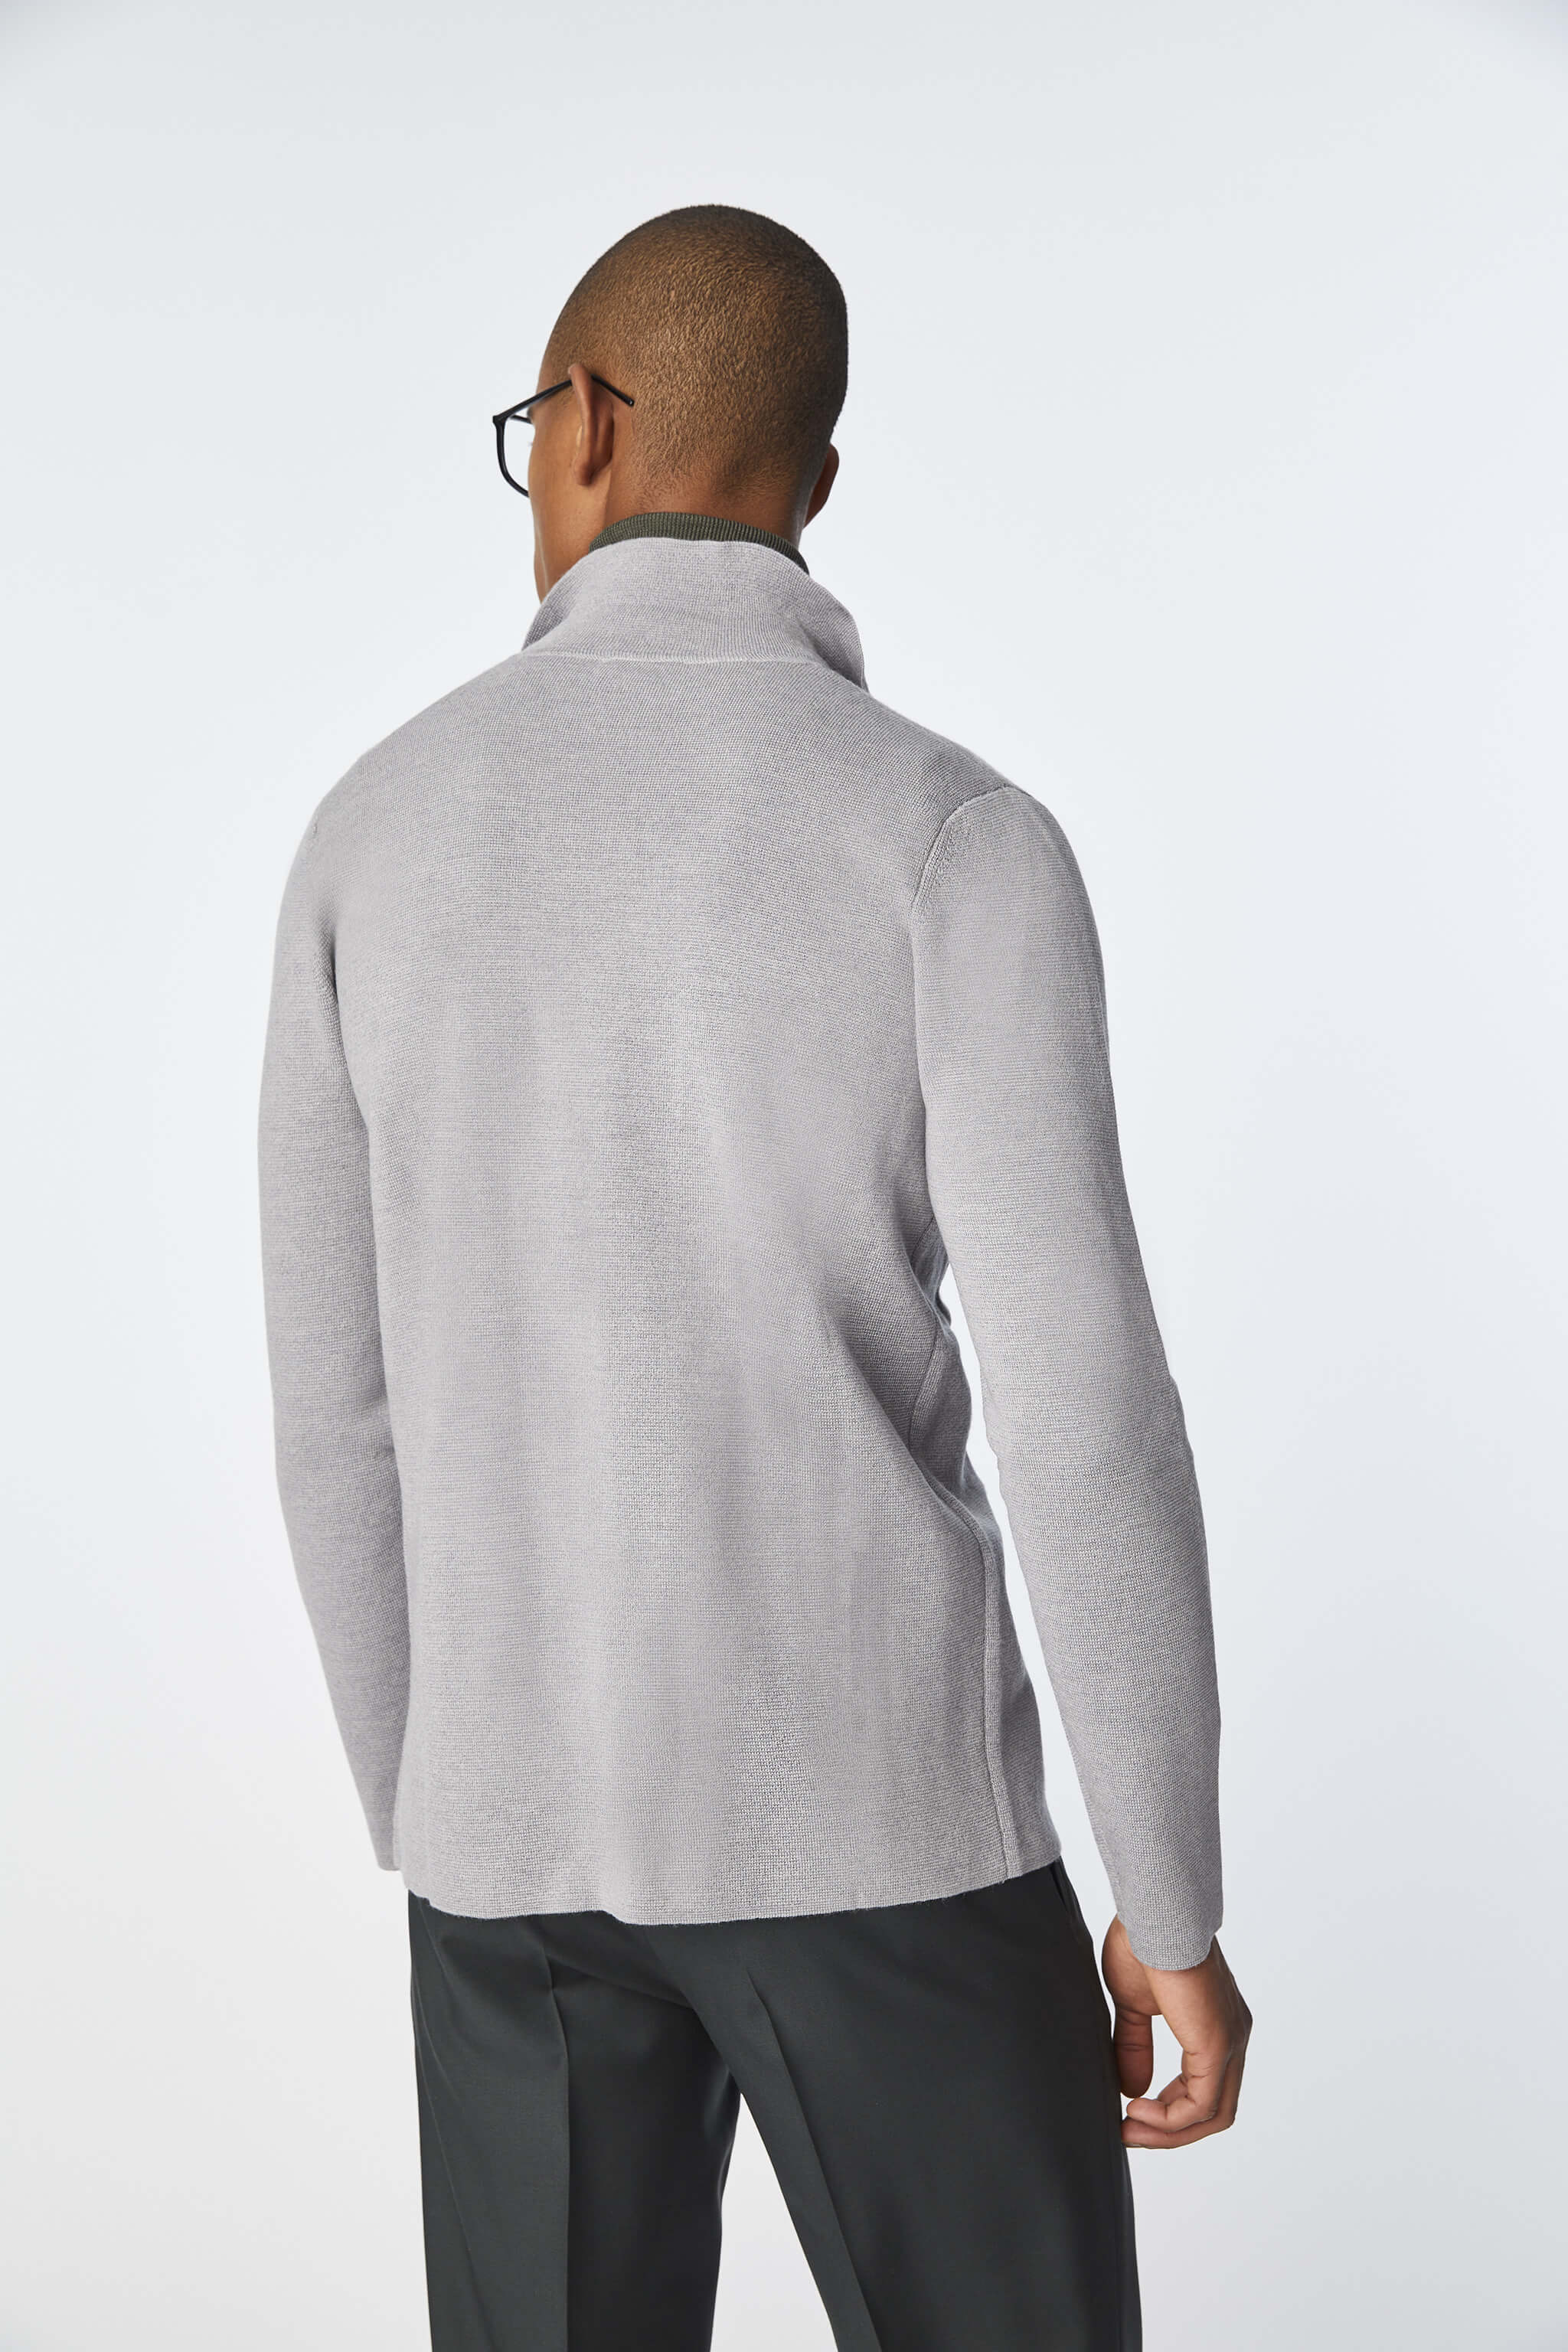 Drop stitch overshirt in gray